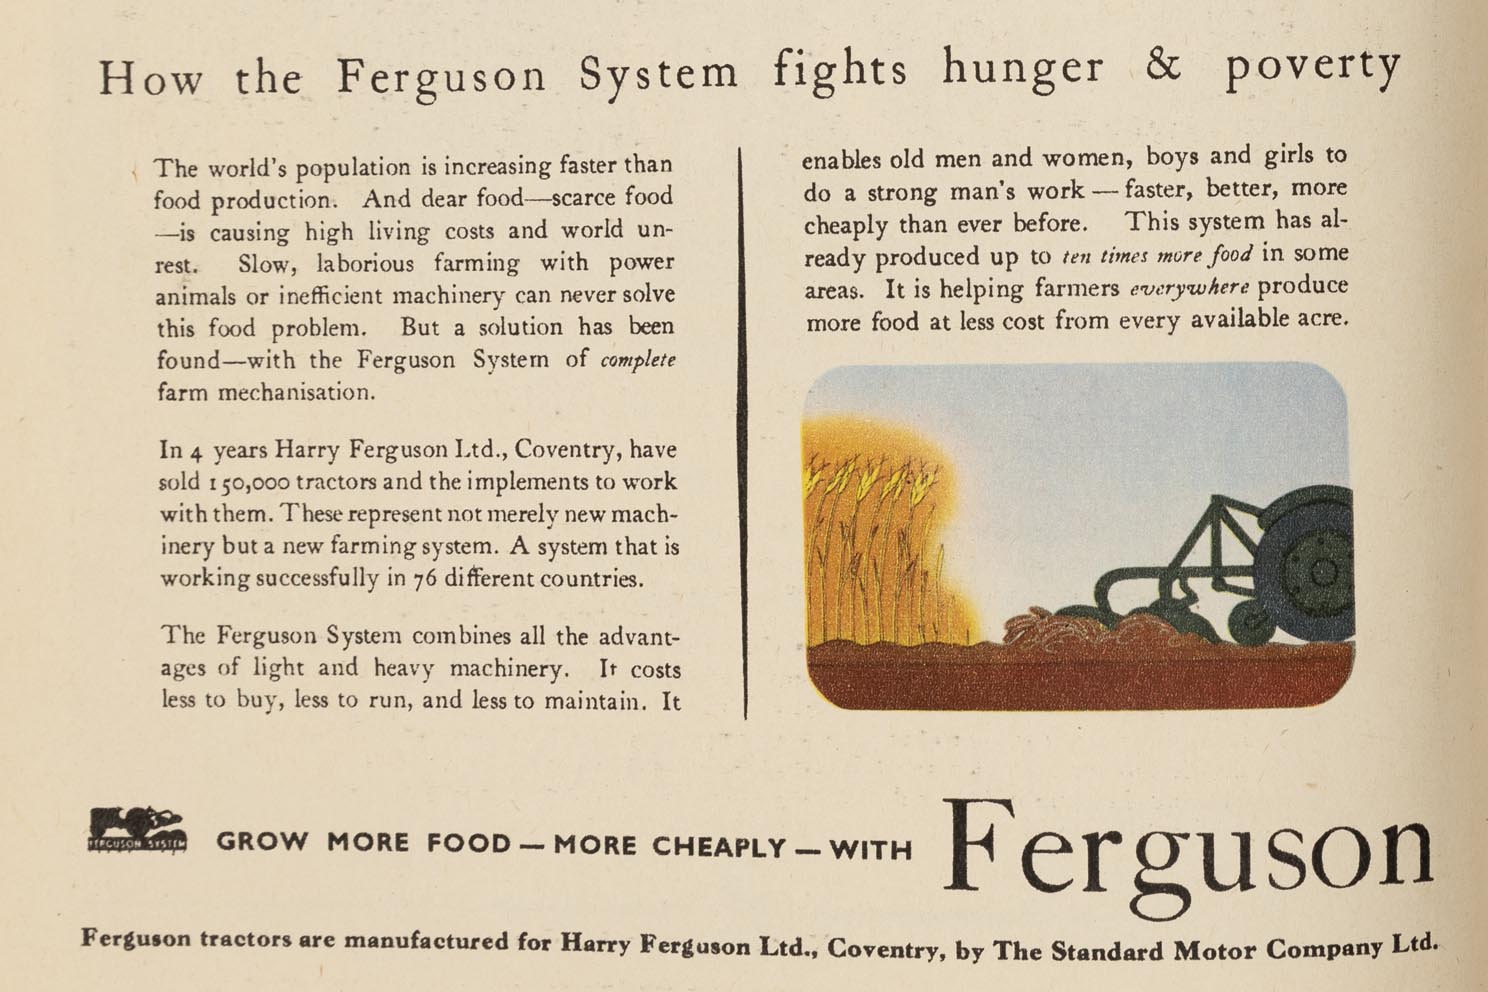 Post-war food security